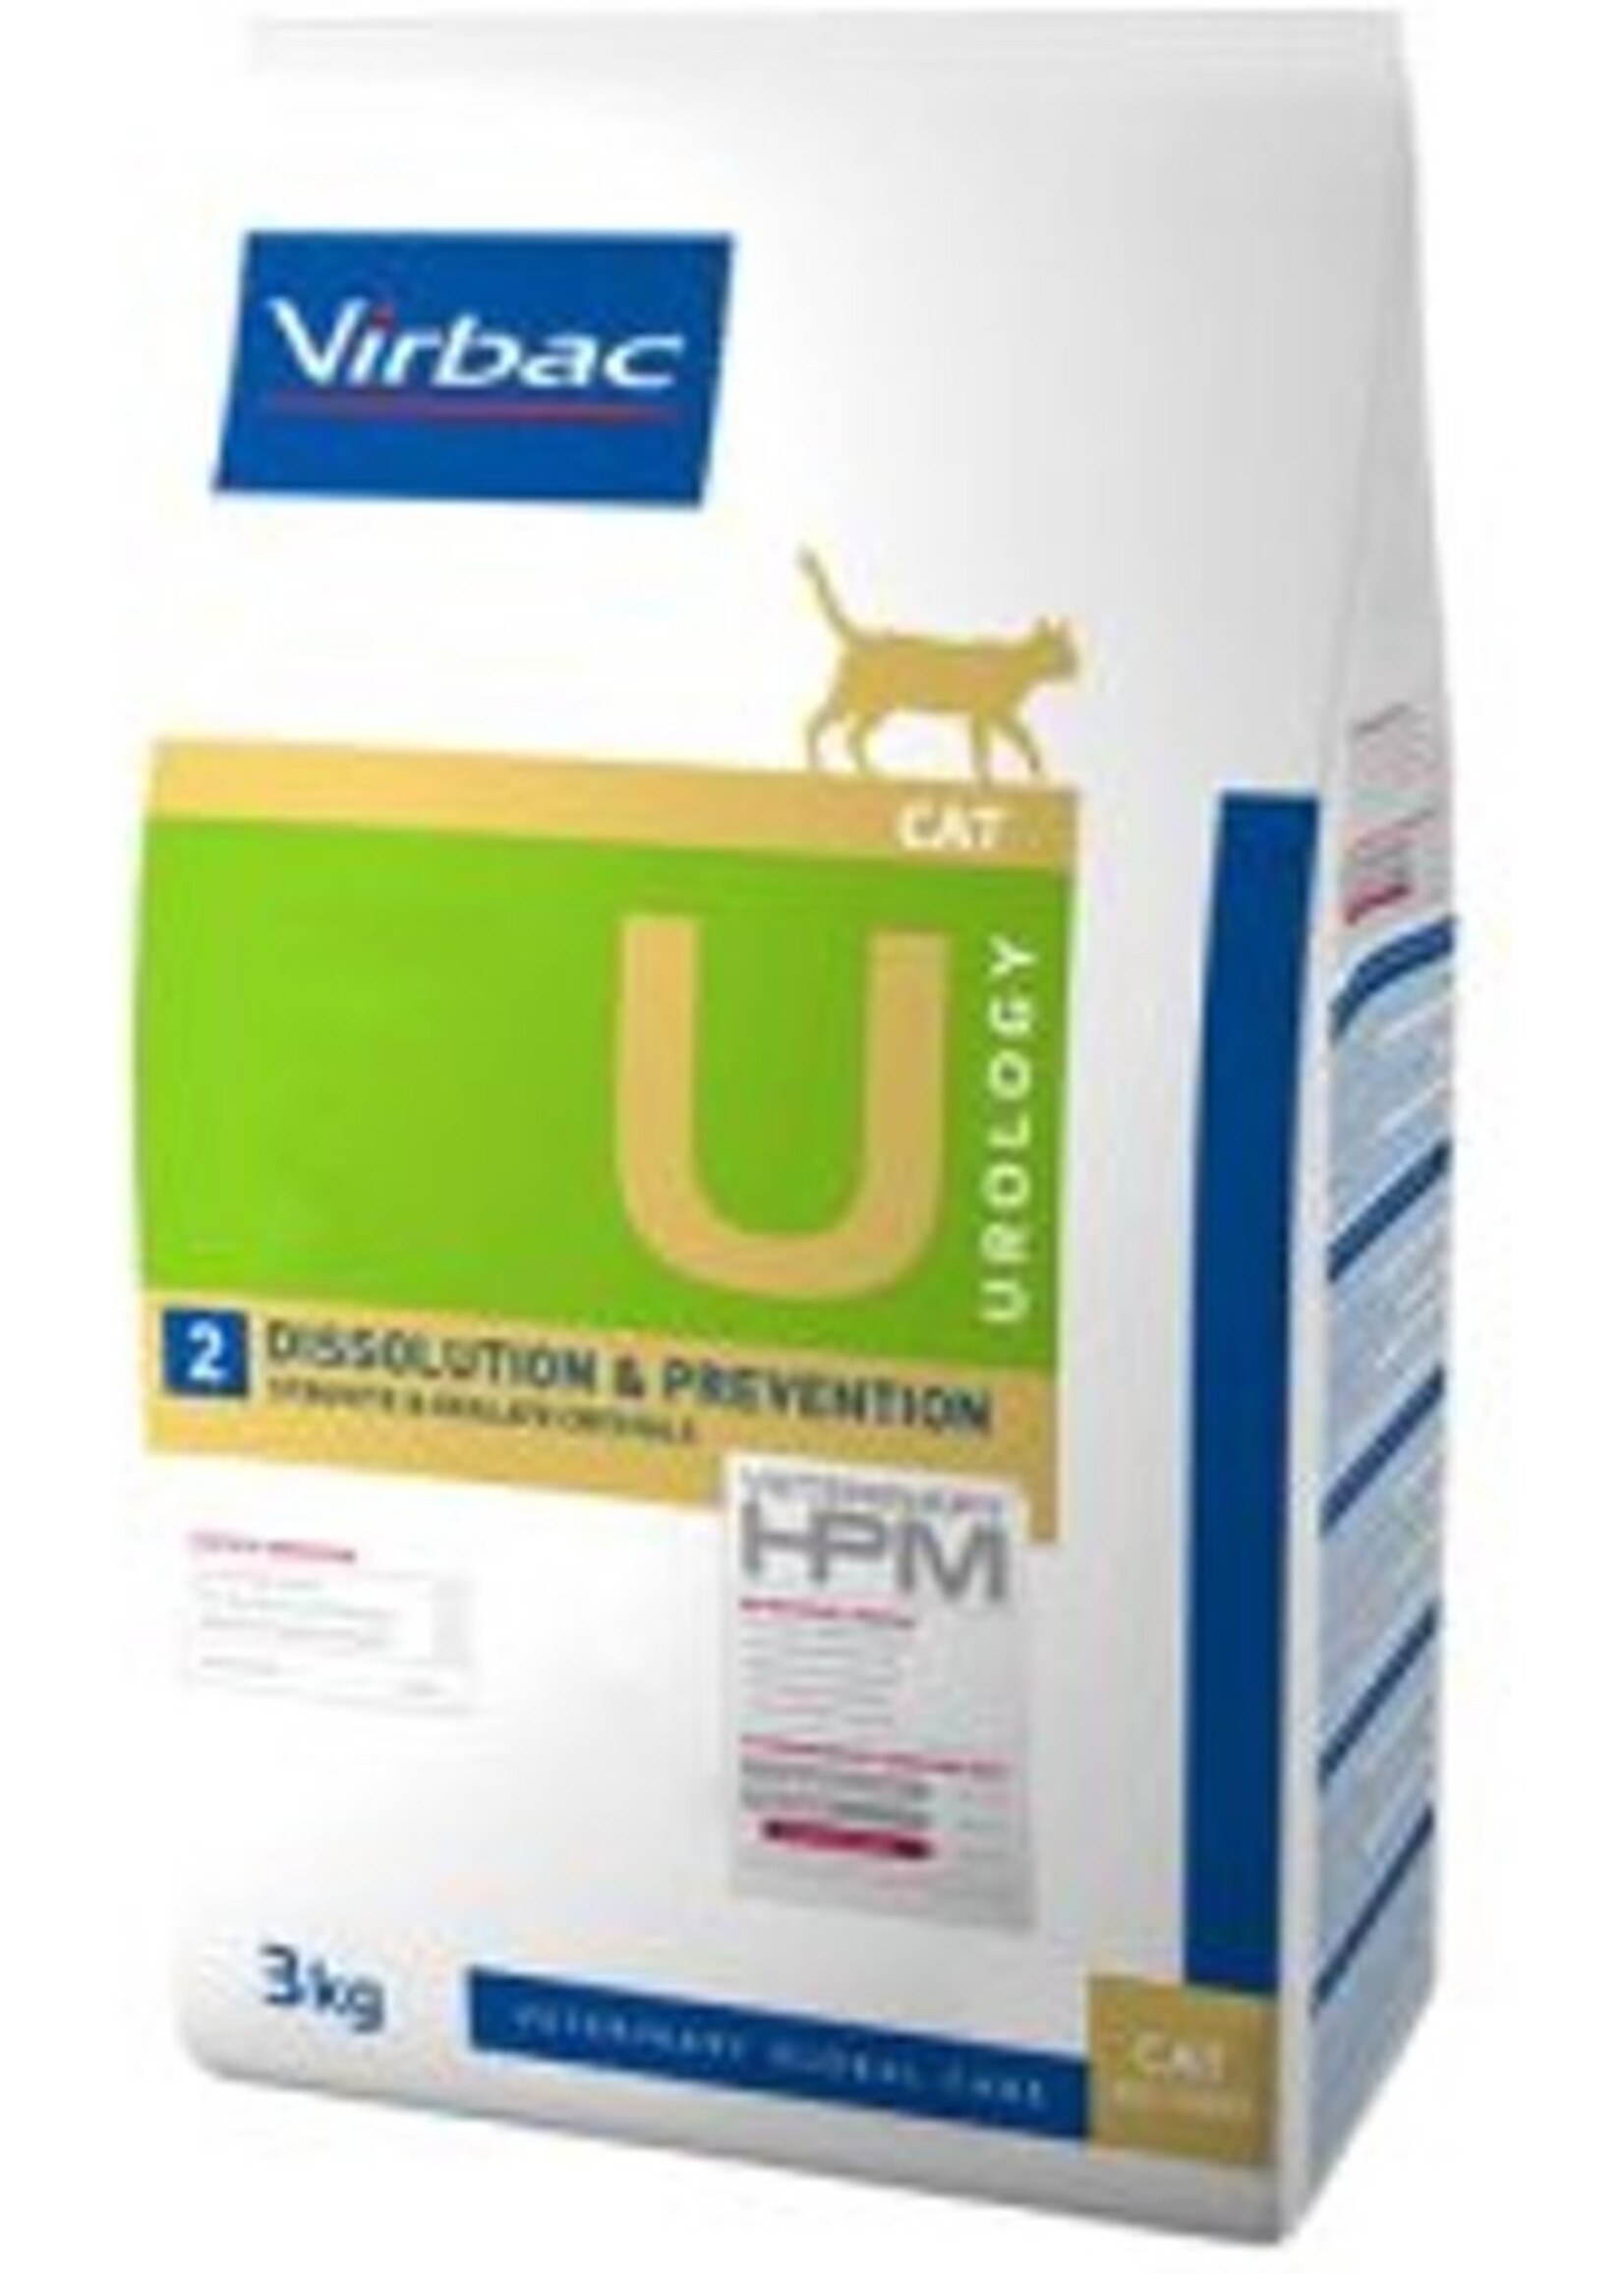 Virbac Virbac Hpm Katze Dissolution/prevention U2 3kg